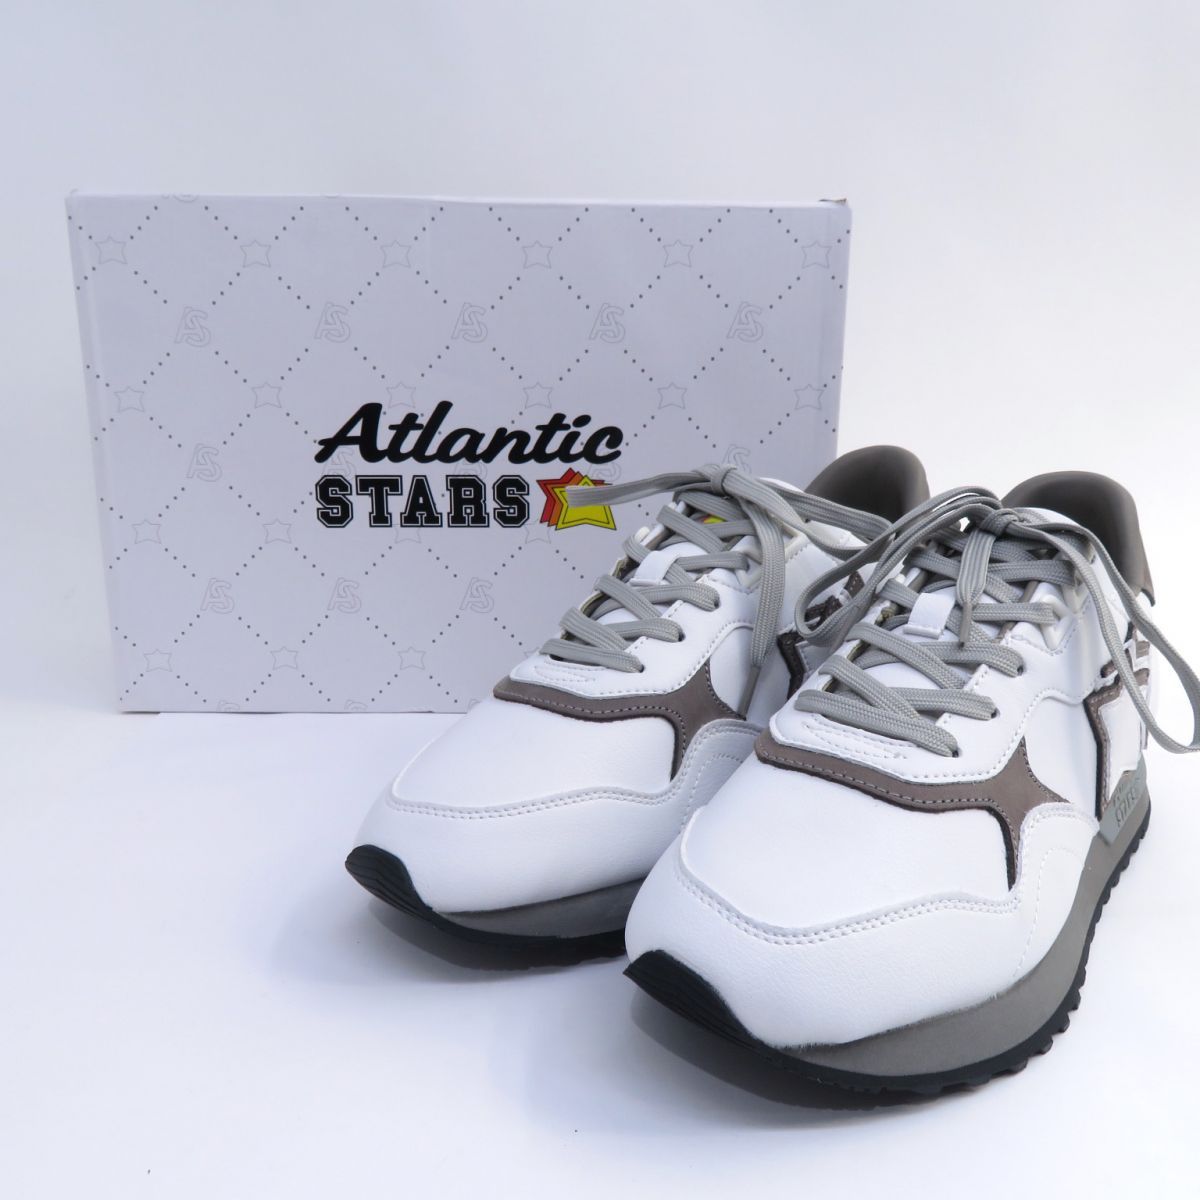 Atlantic STARS スニーカー リゲル 43 - スニーカー